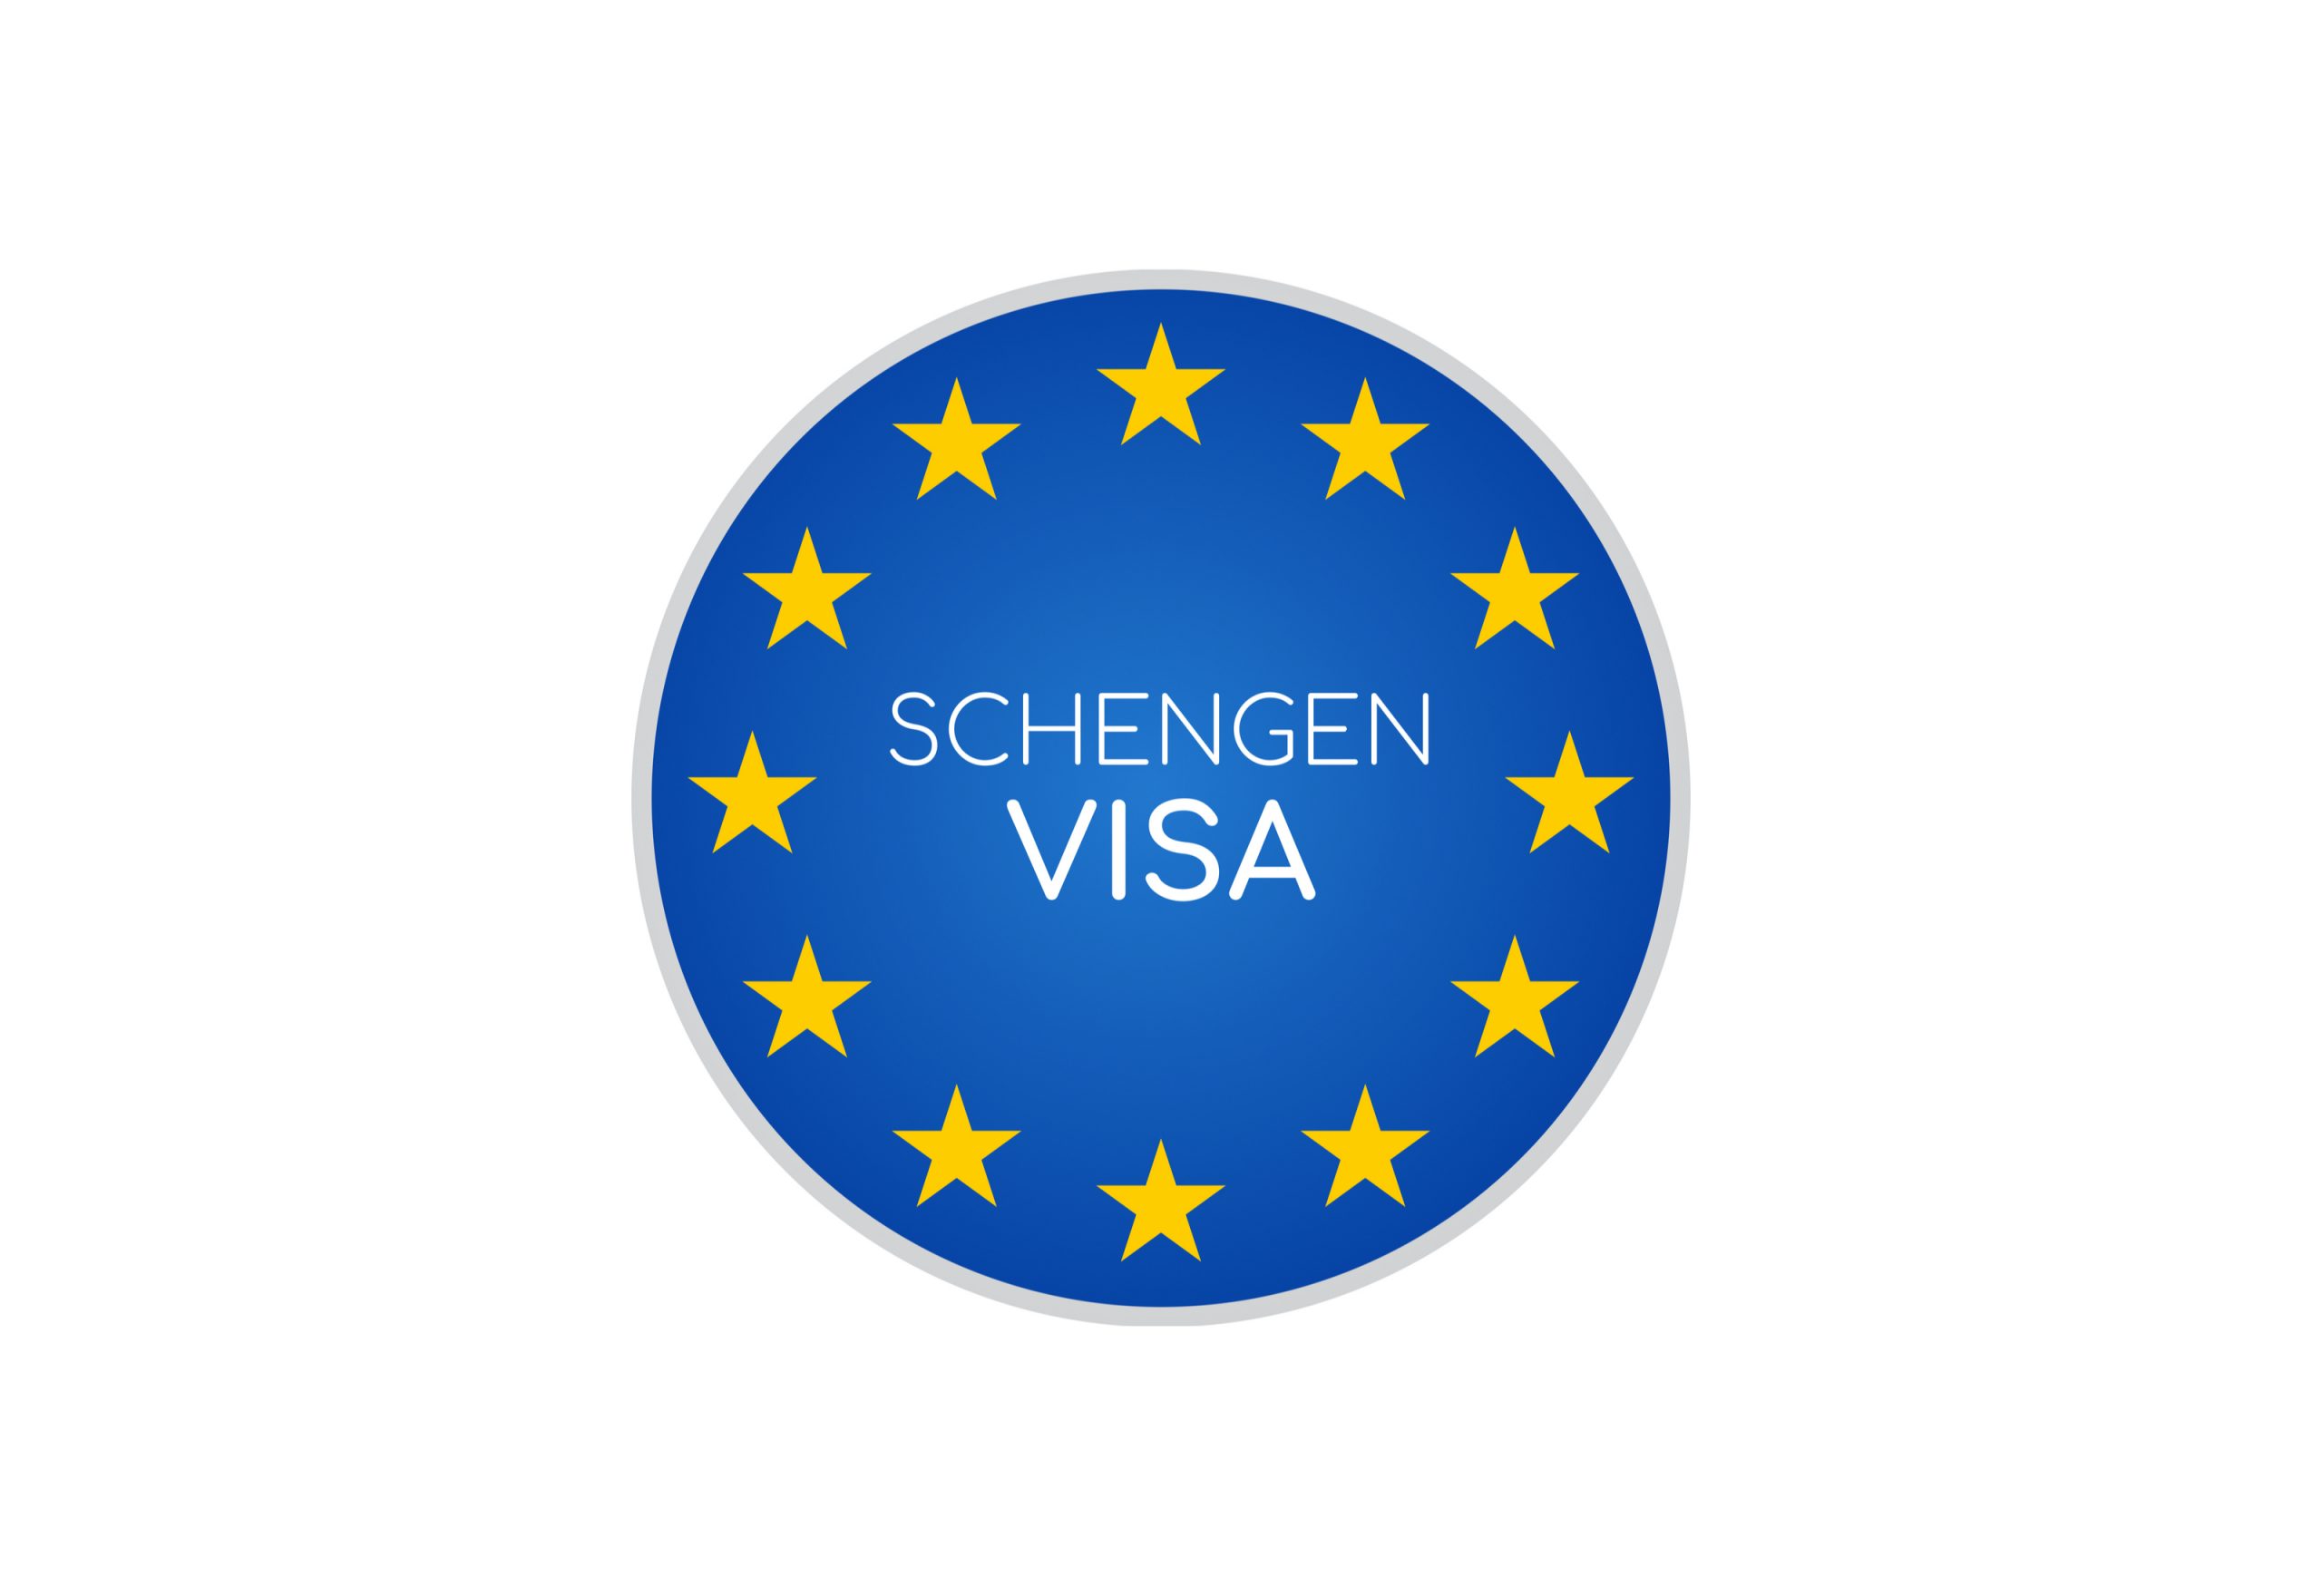 List of non-Schengen countries that can be visited with a Schengen visa